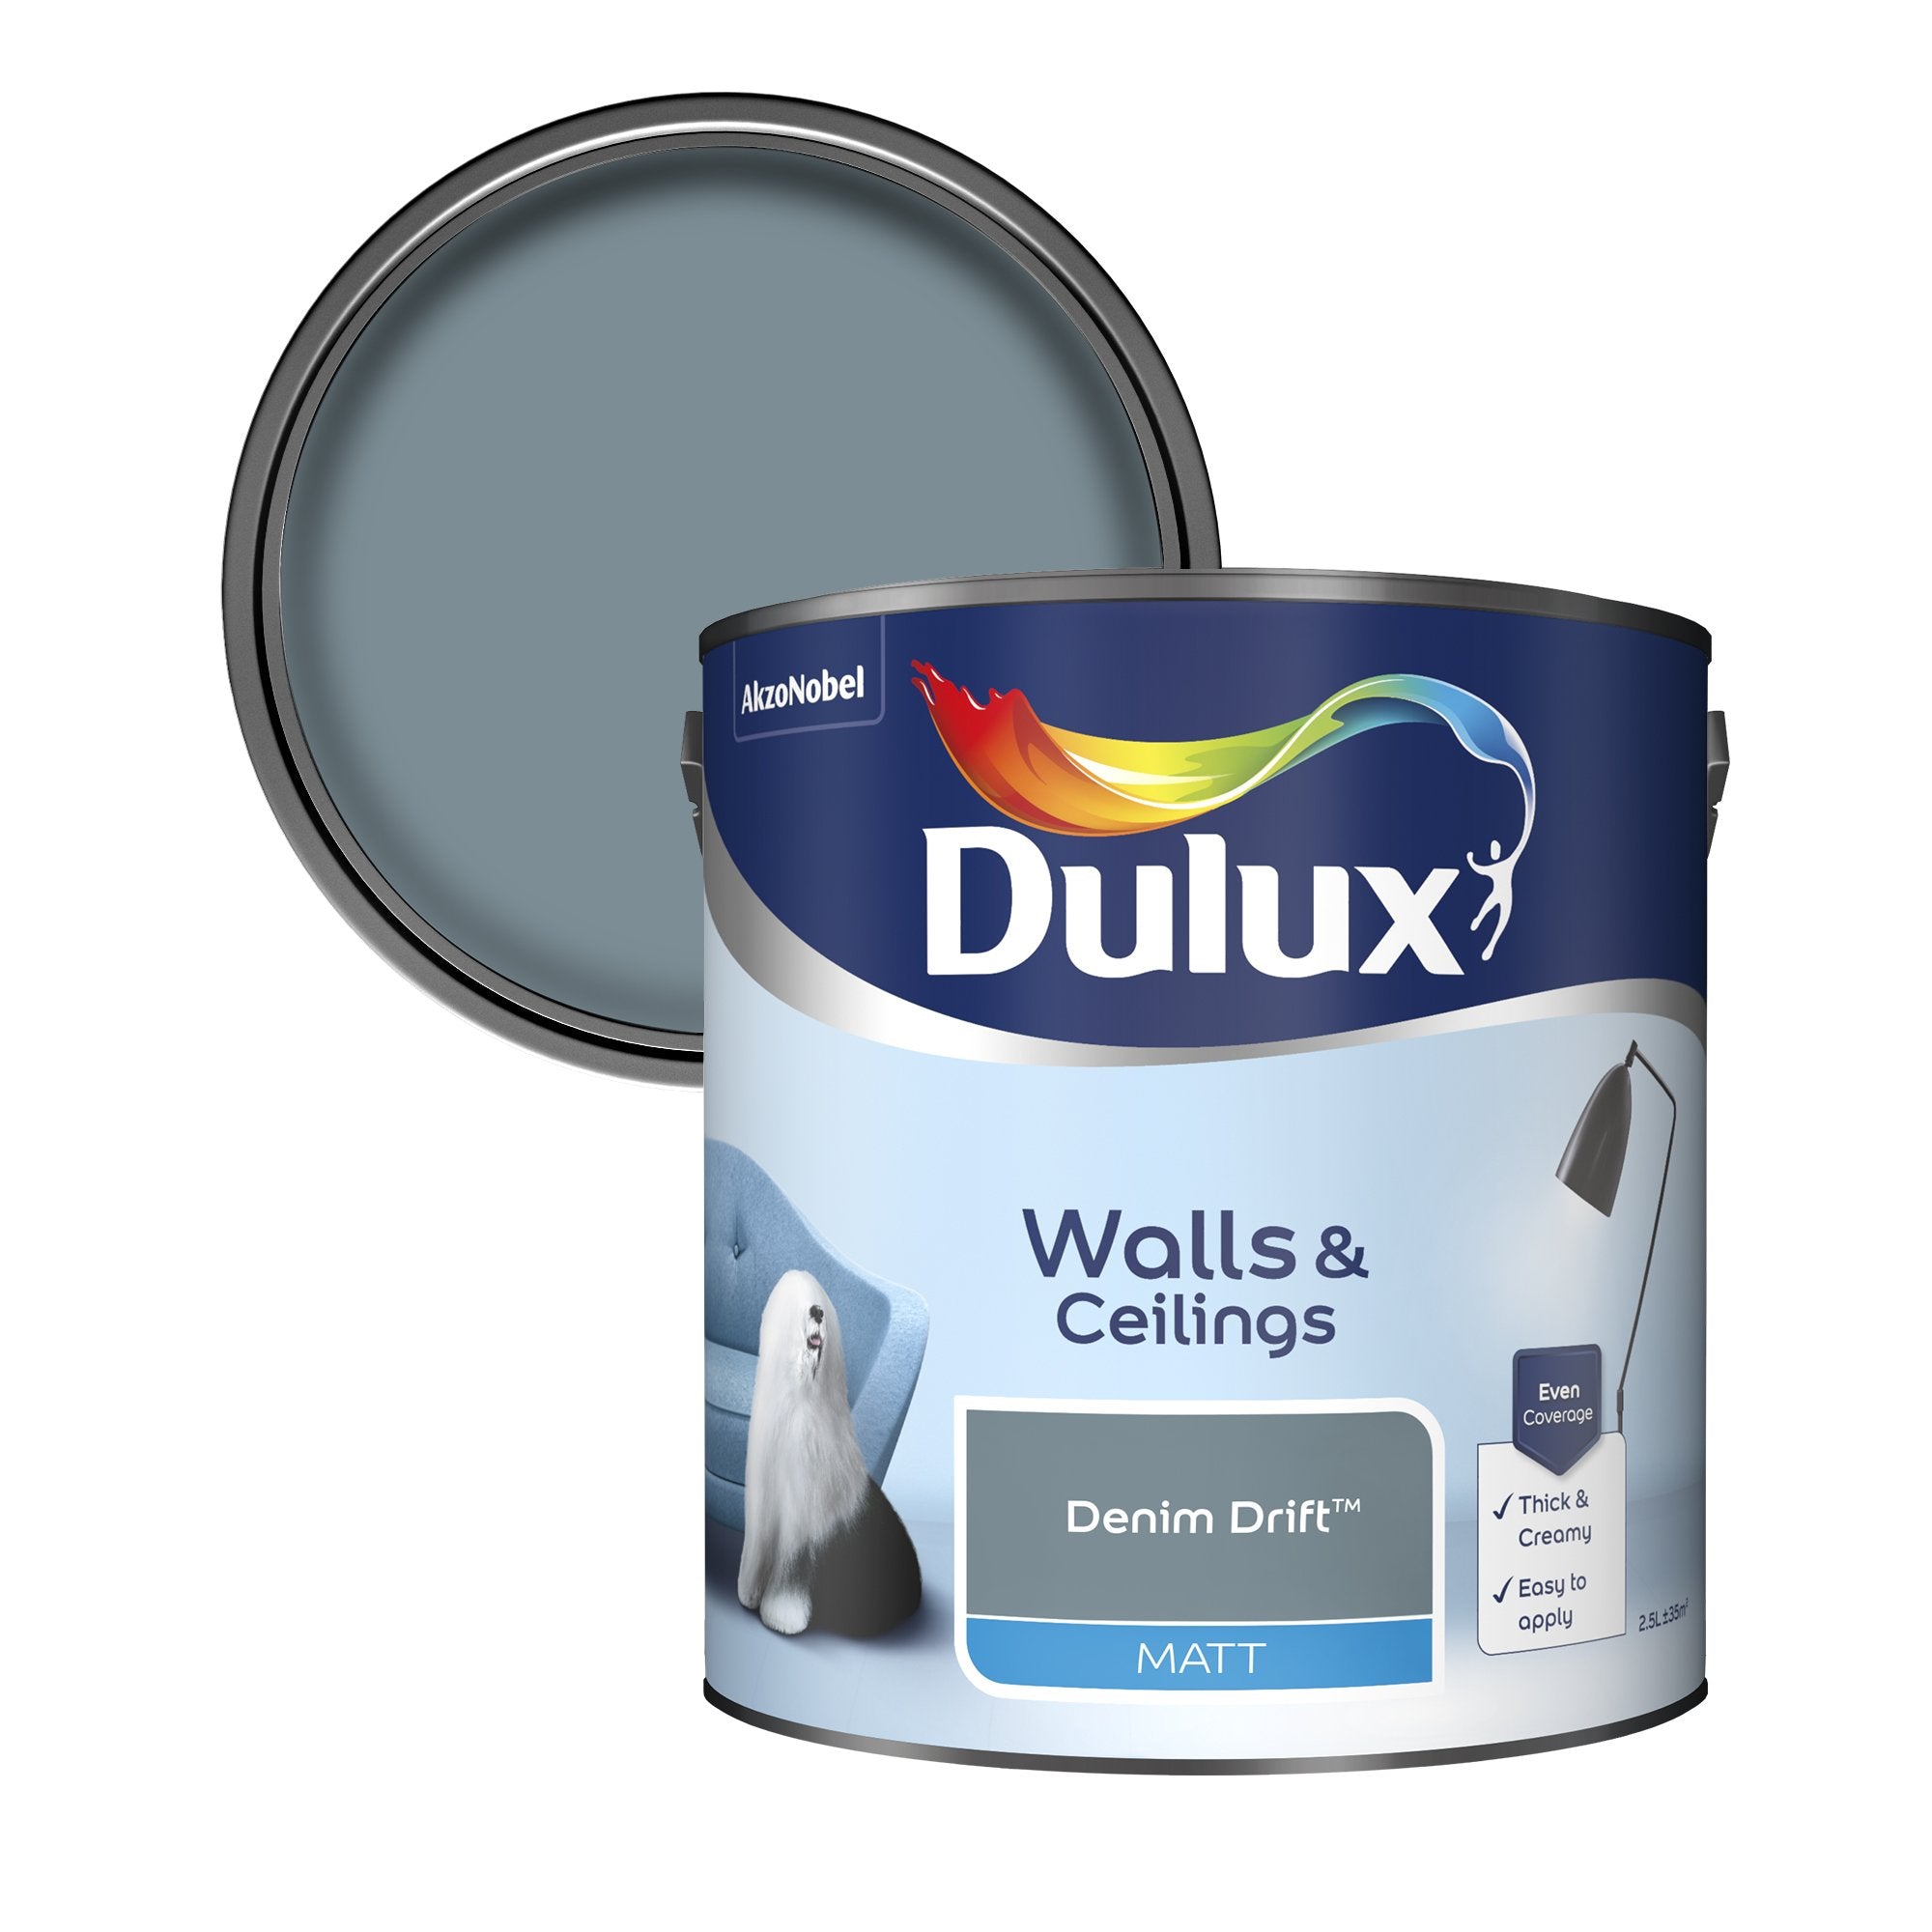 Dulux-Matt-Emulsion-Paint-For-Walls-And-Ceilings-Denim-Drift-2.5L